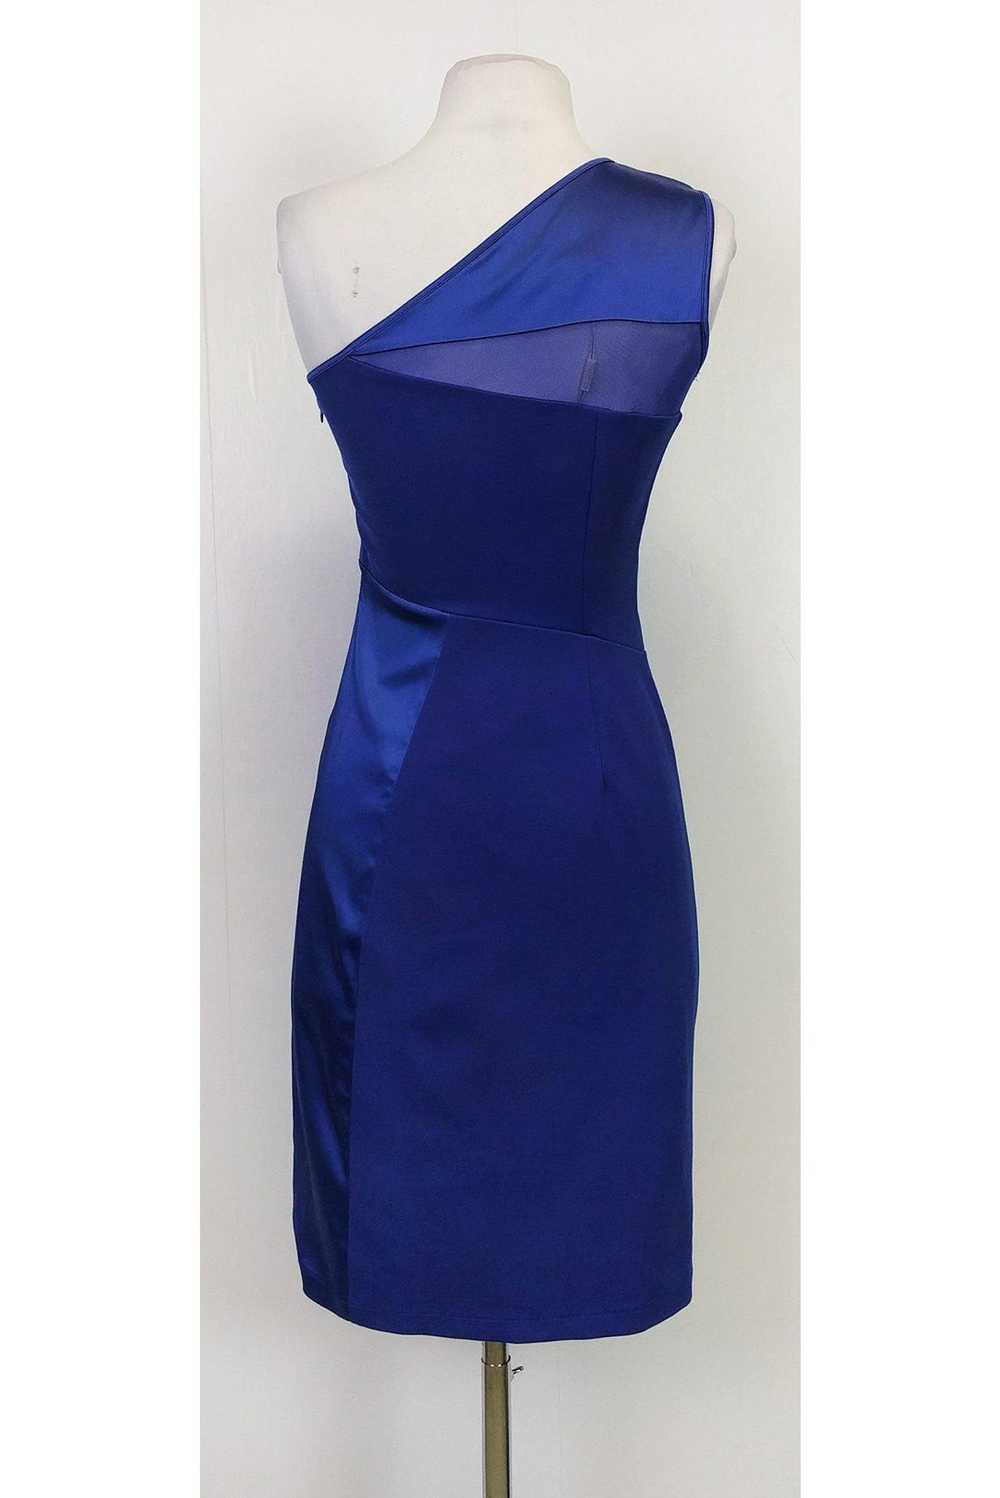 Halston Heritage - Purple One Shoulder Dress Sz XS - image 3